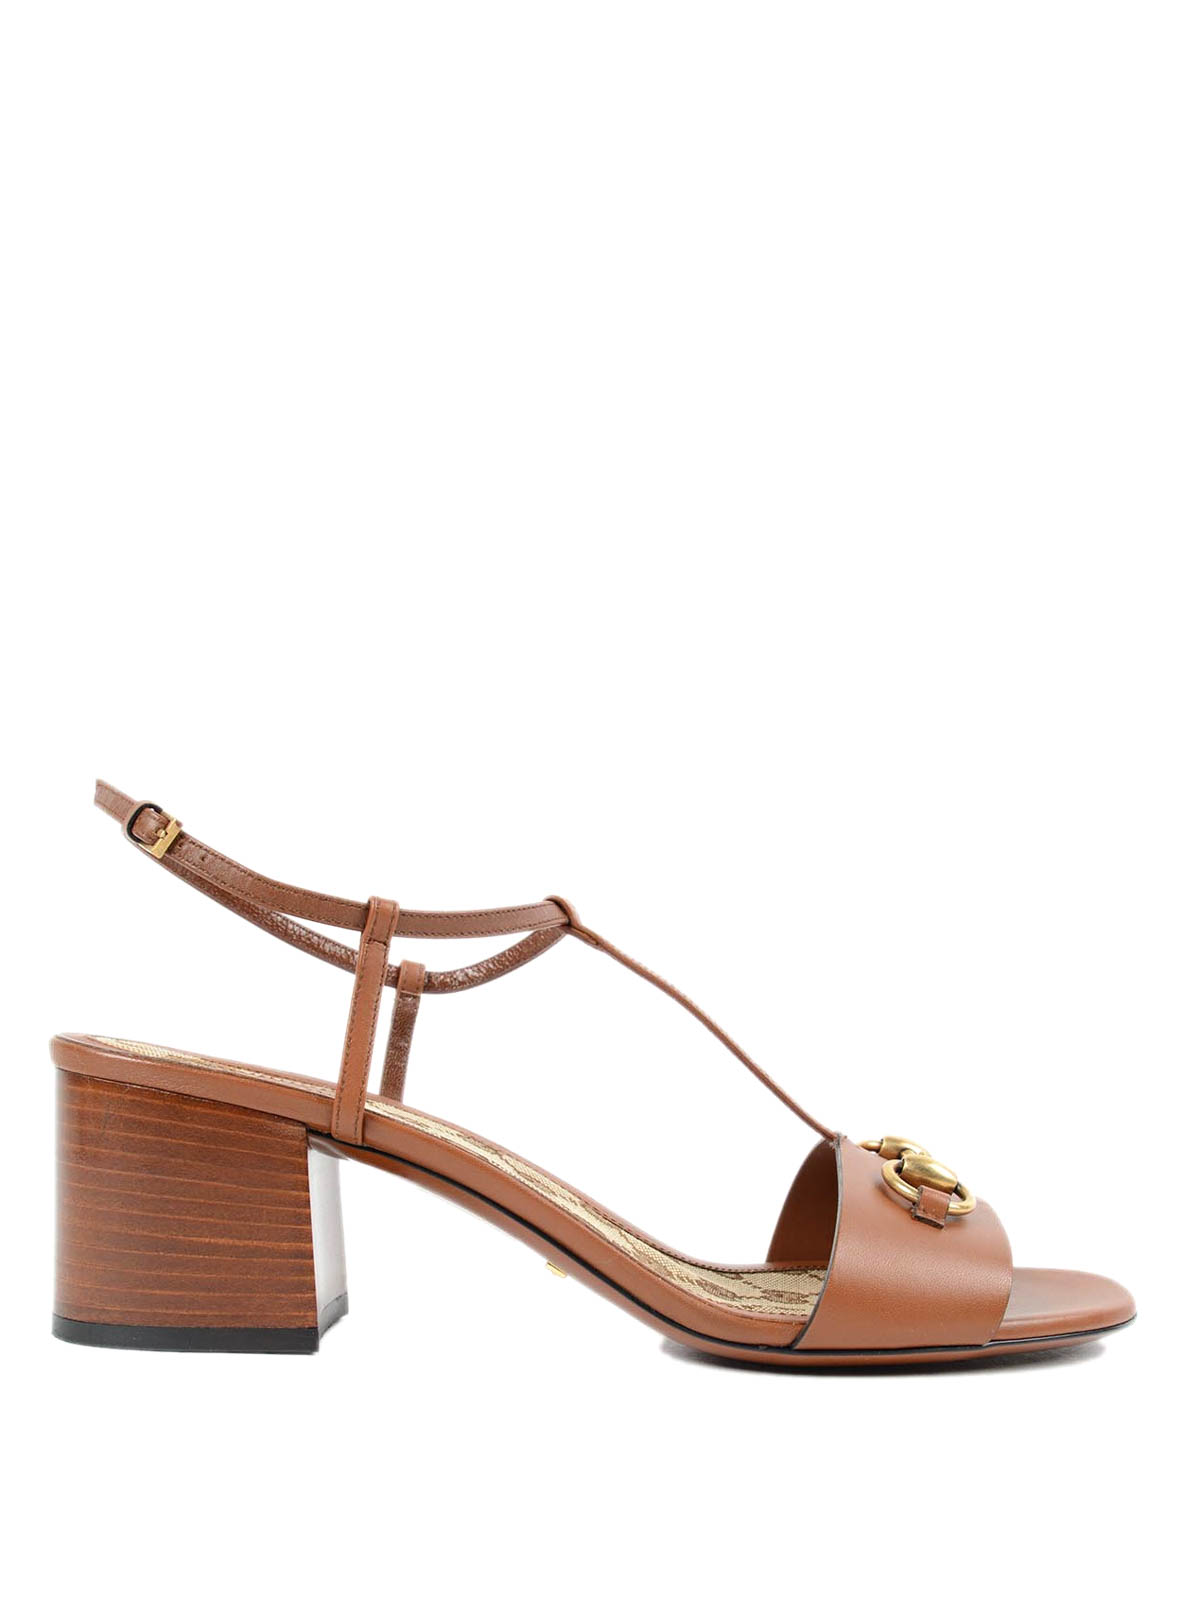 T strap sandals  by Gucci  sandals  Shop  online at iKRIX com